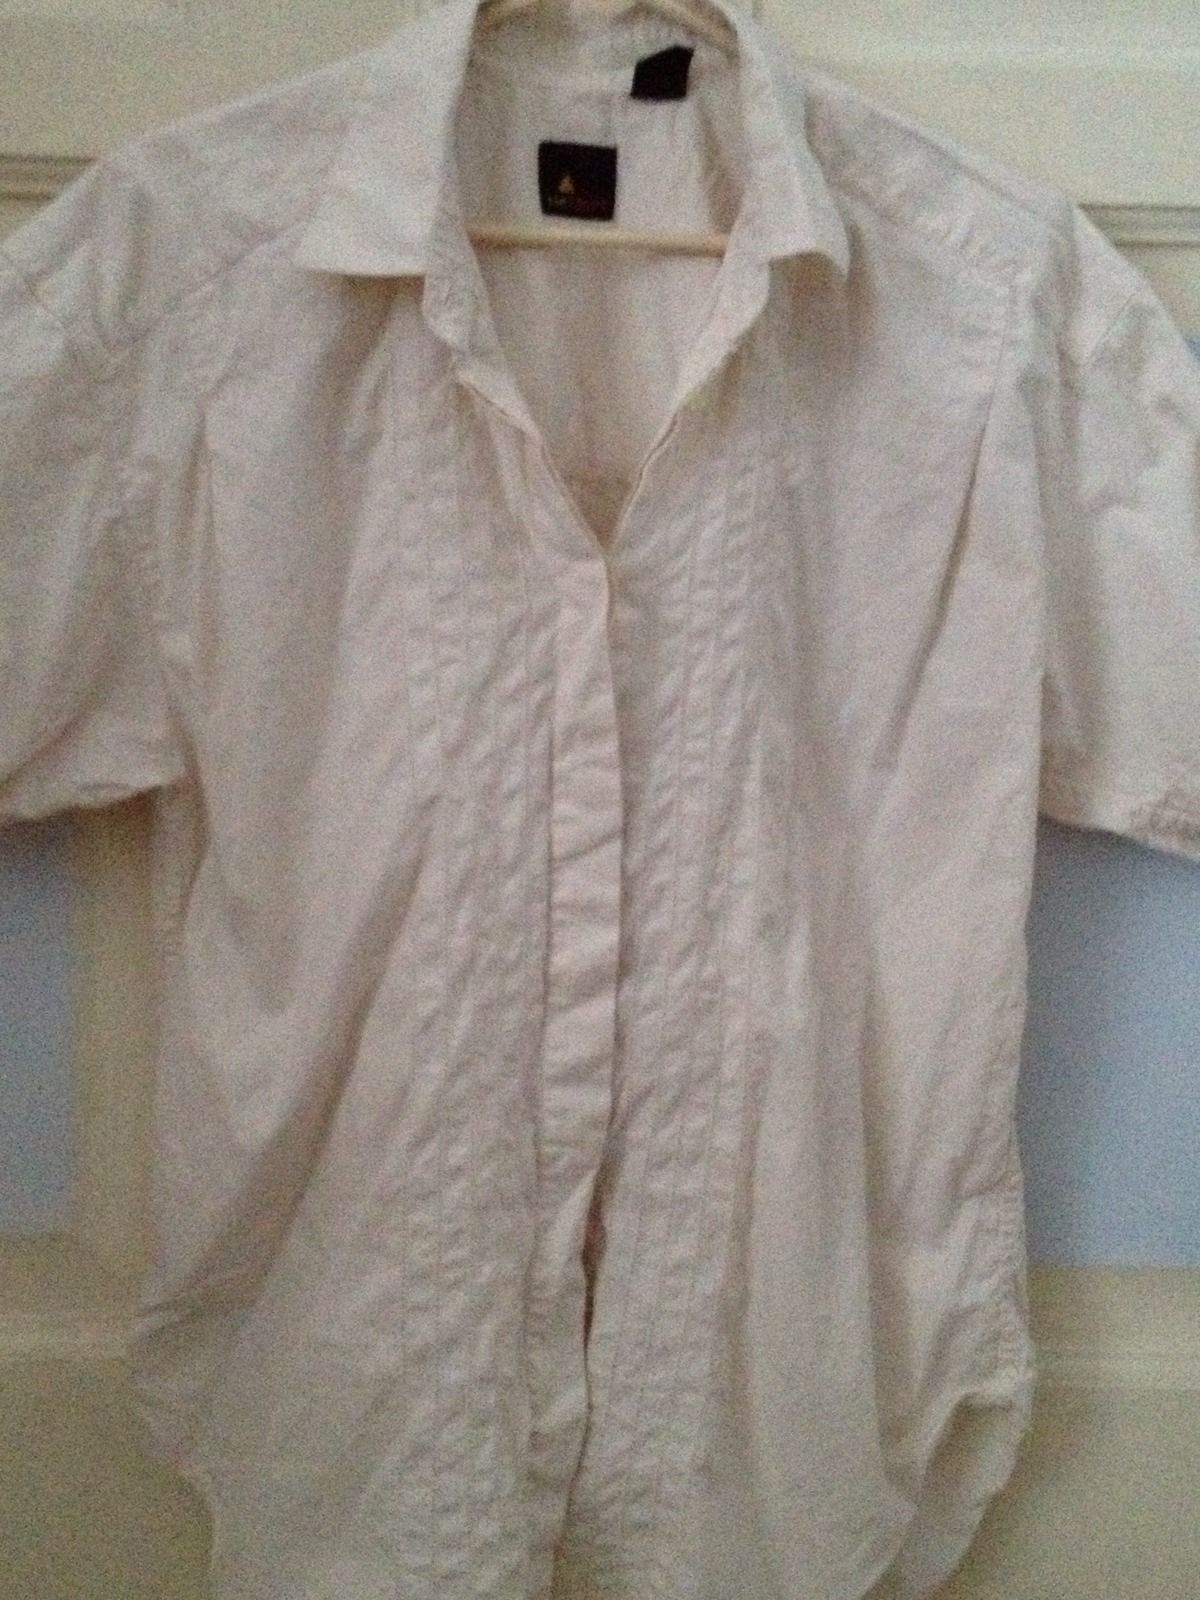 Primary image for liz sport size large short sleeve blouse cream